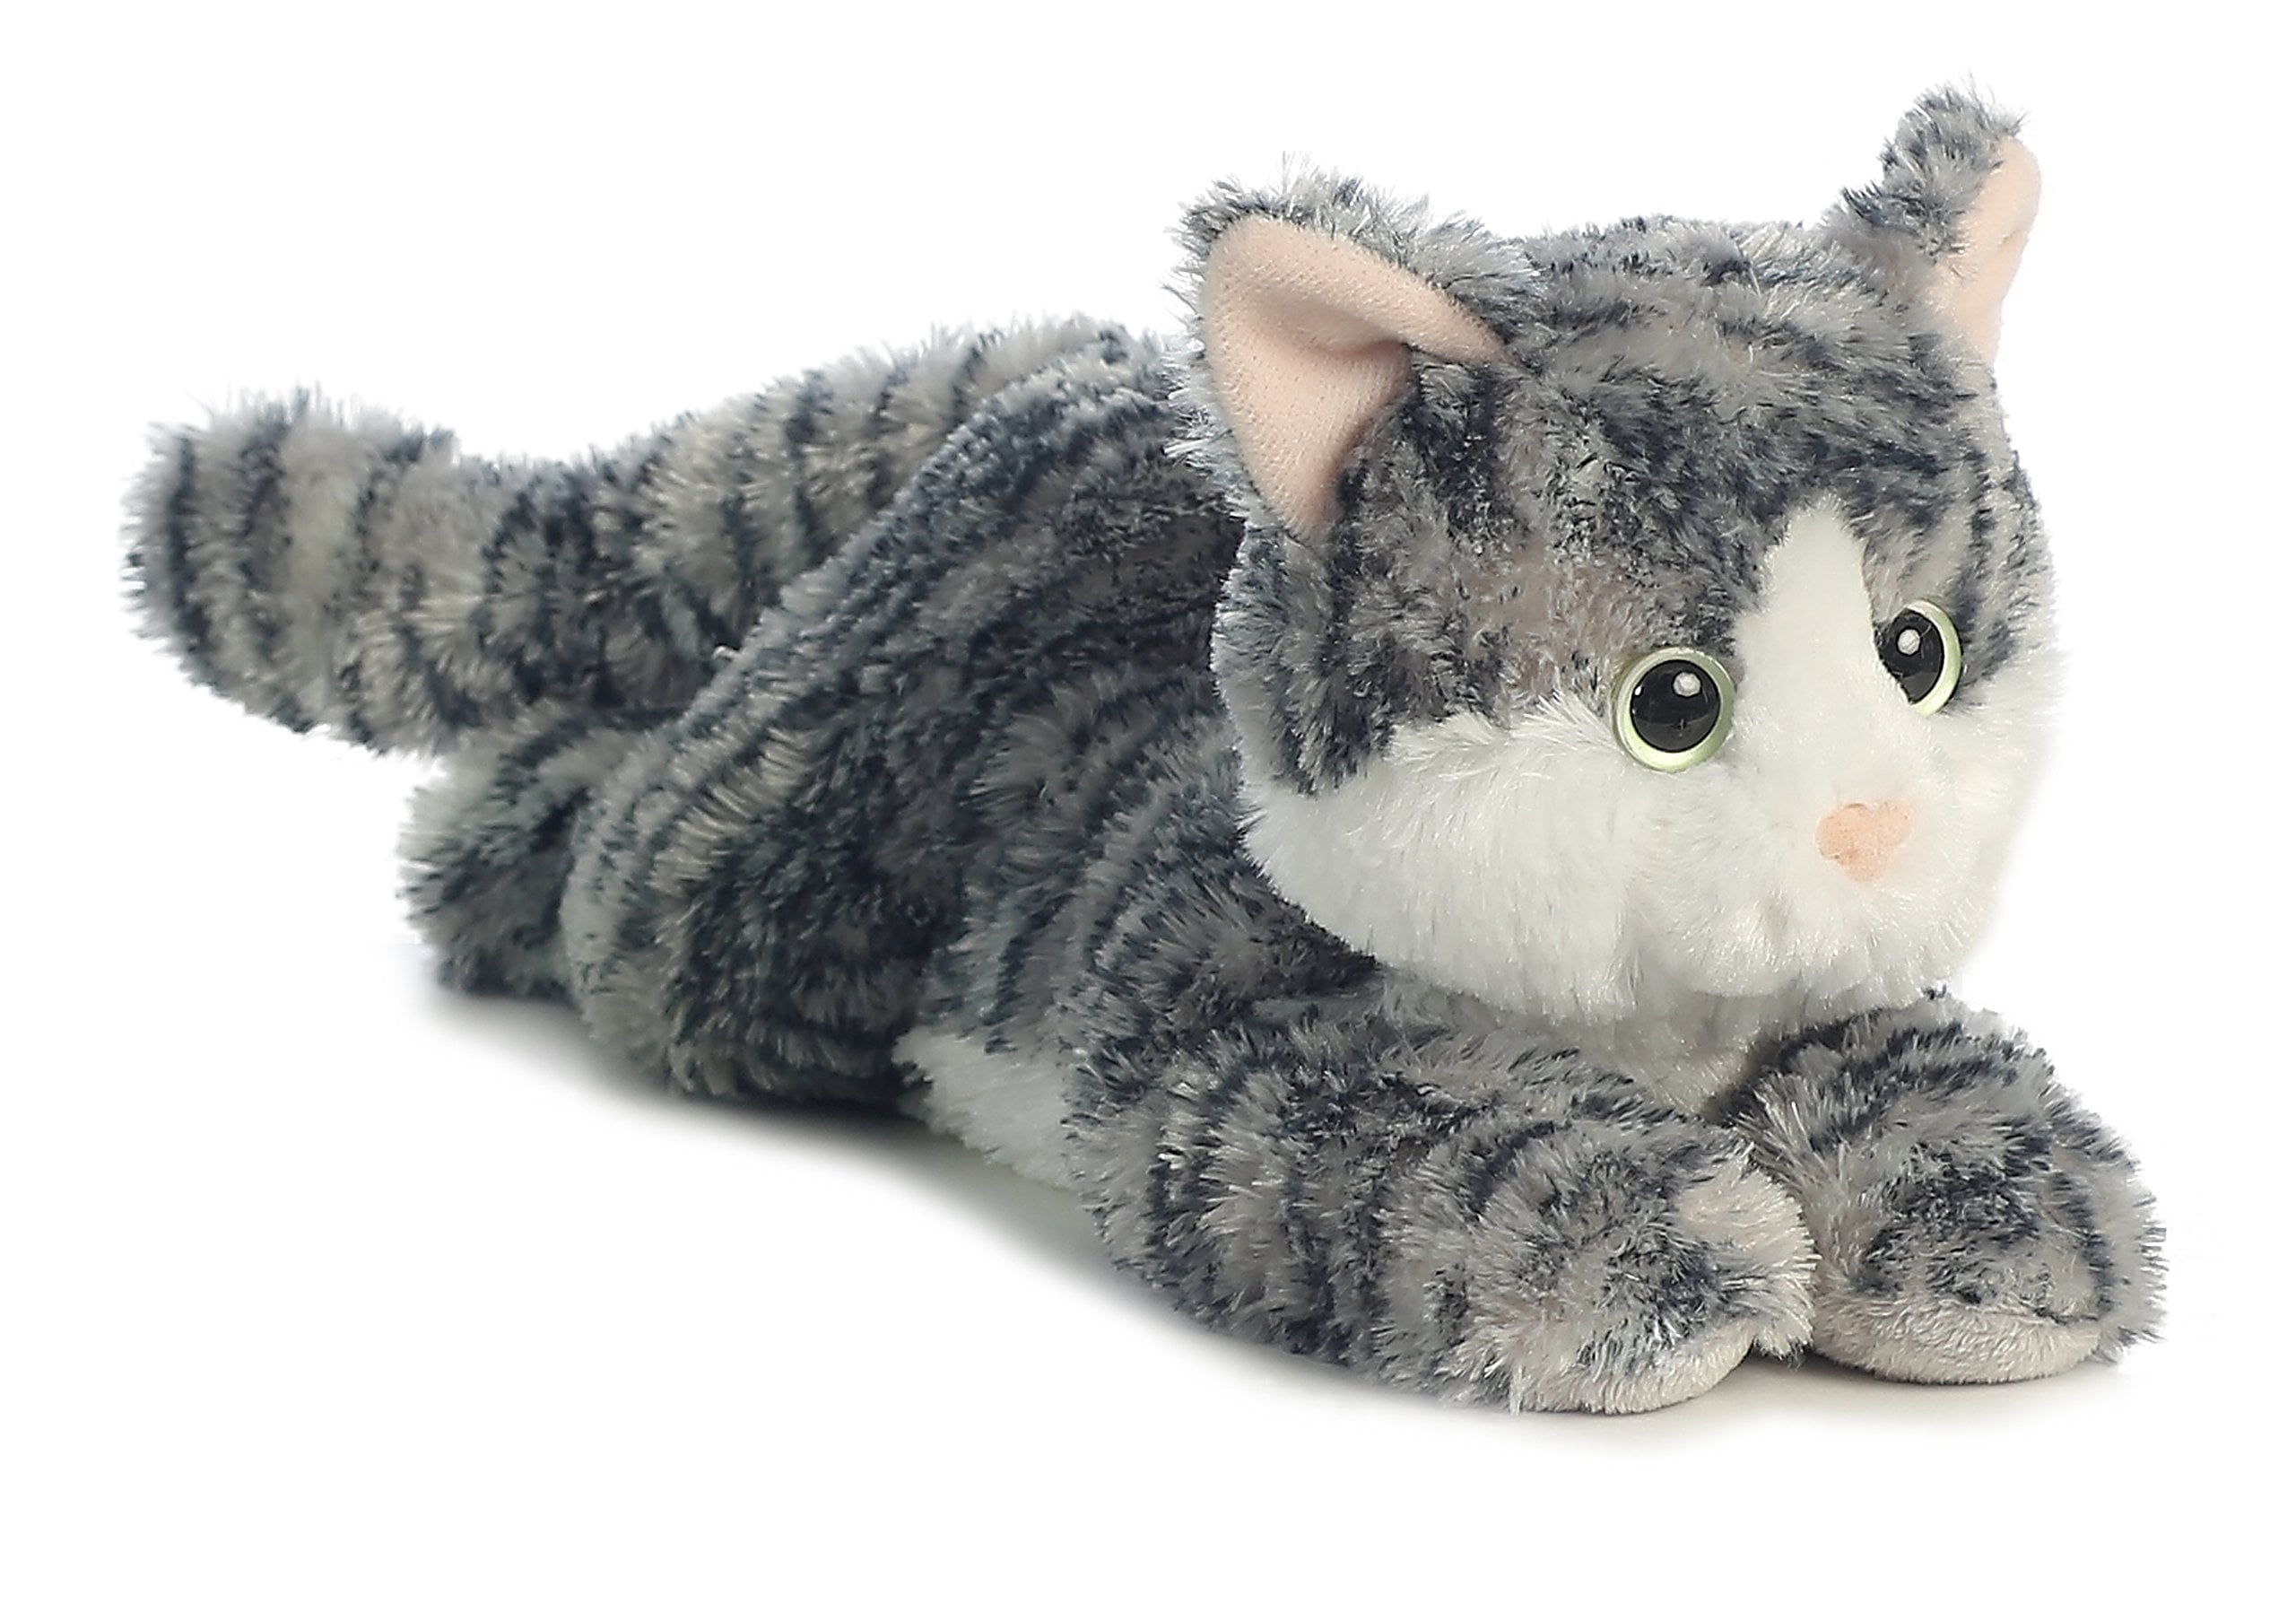 SCATTER Douglas Cuddle Toy plush GREY CAT stuffed animal small gray kitty kitten 